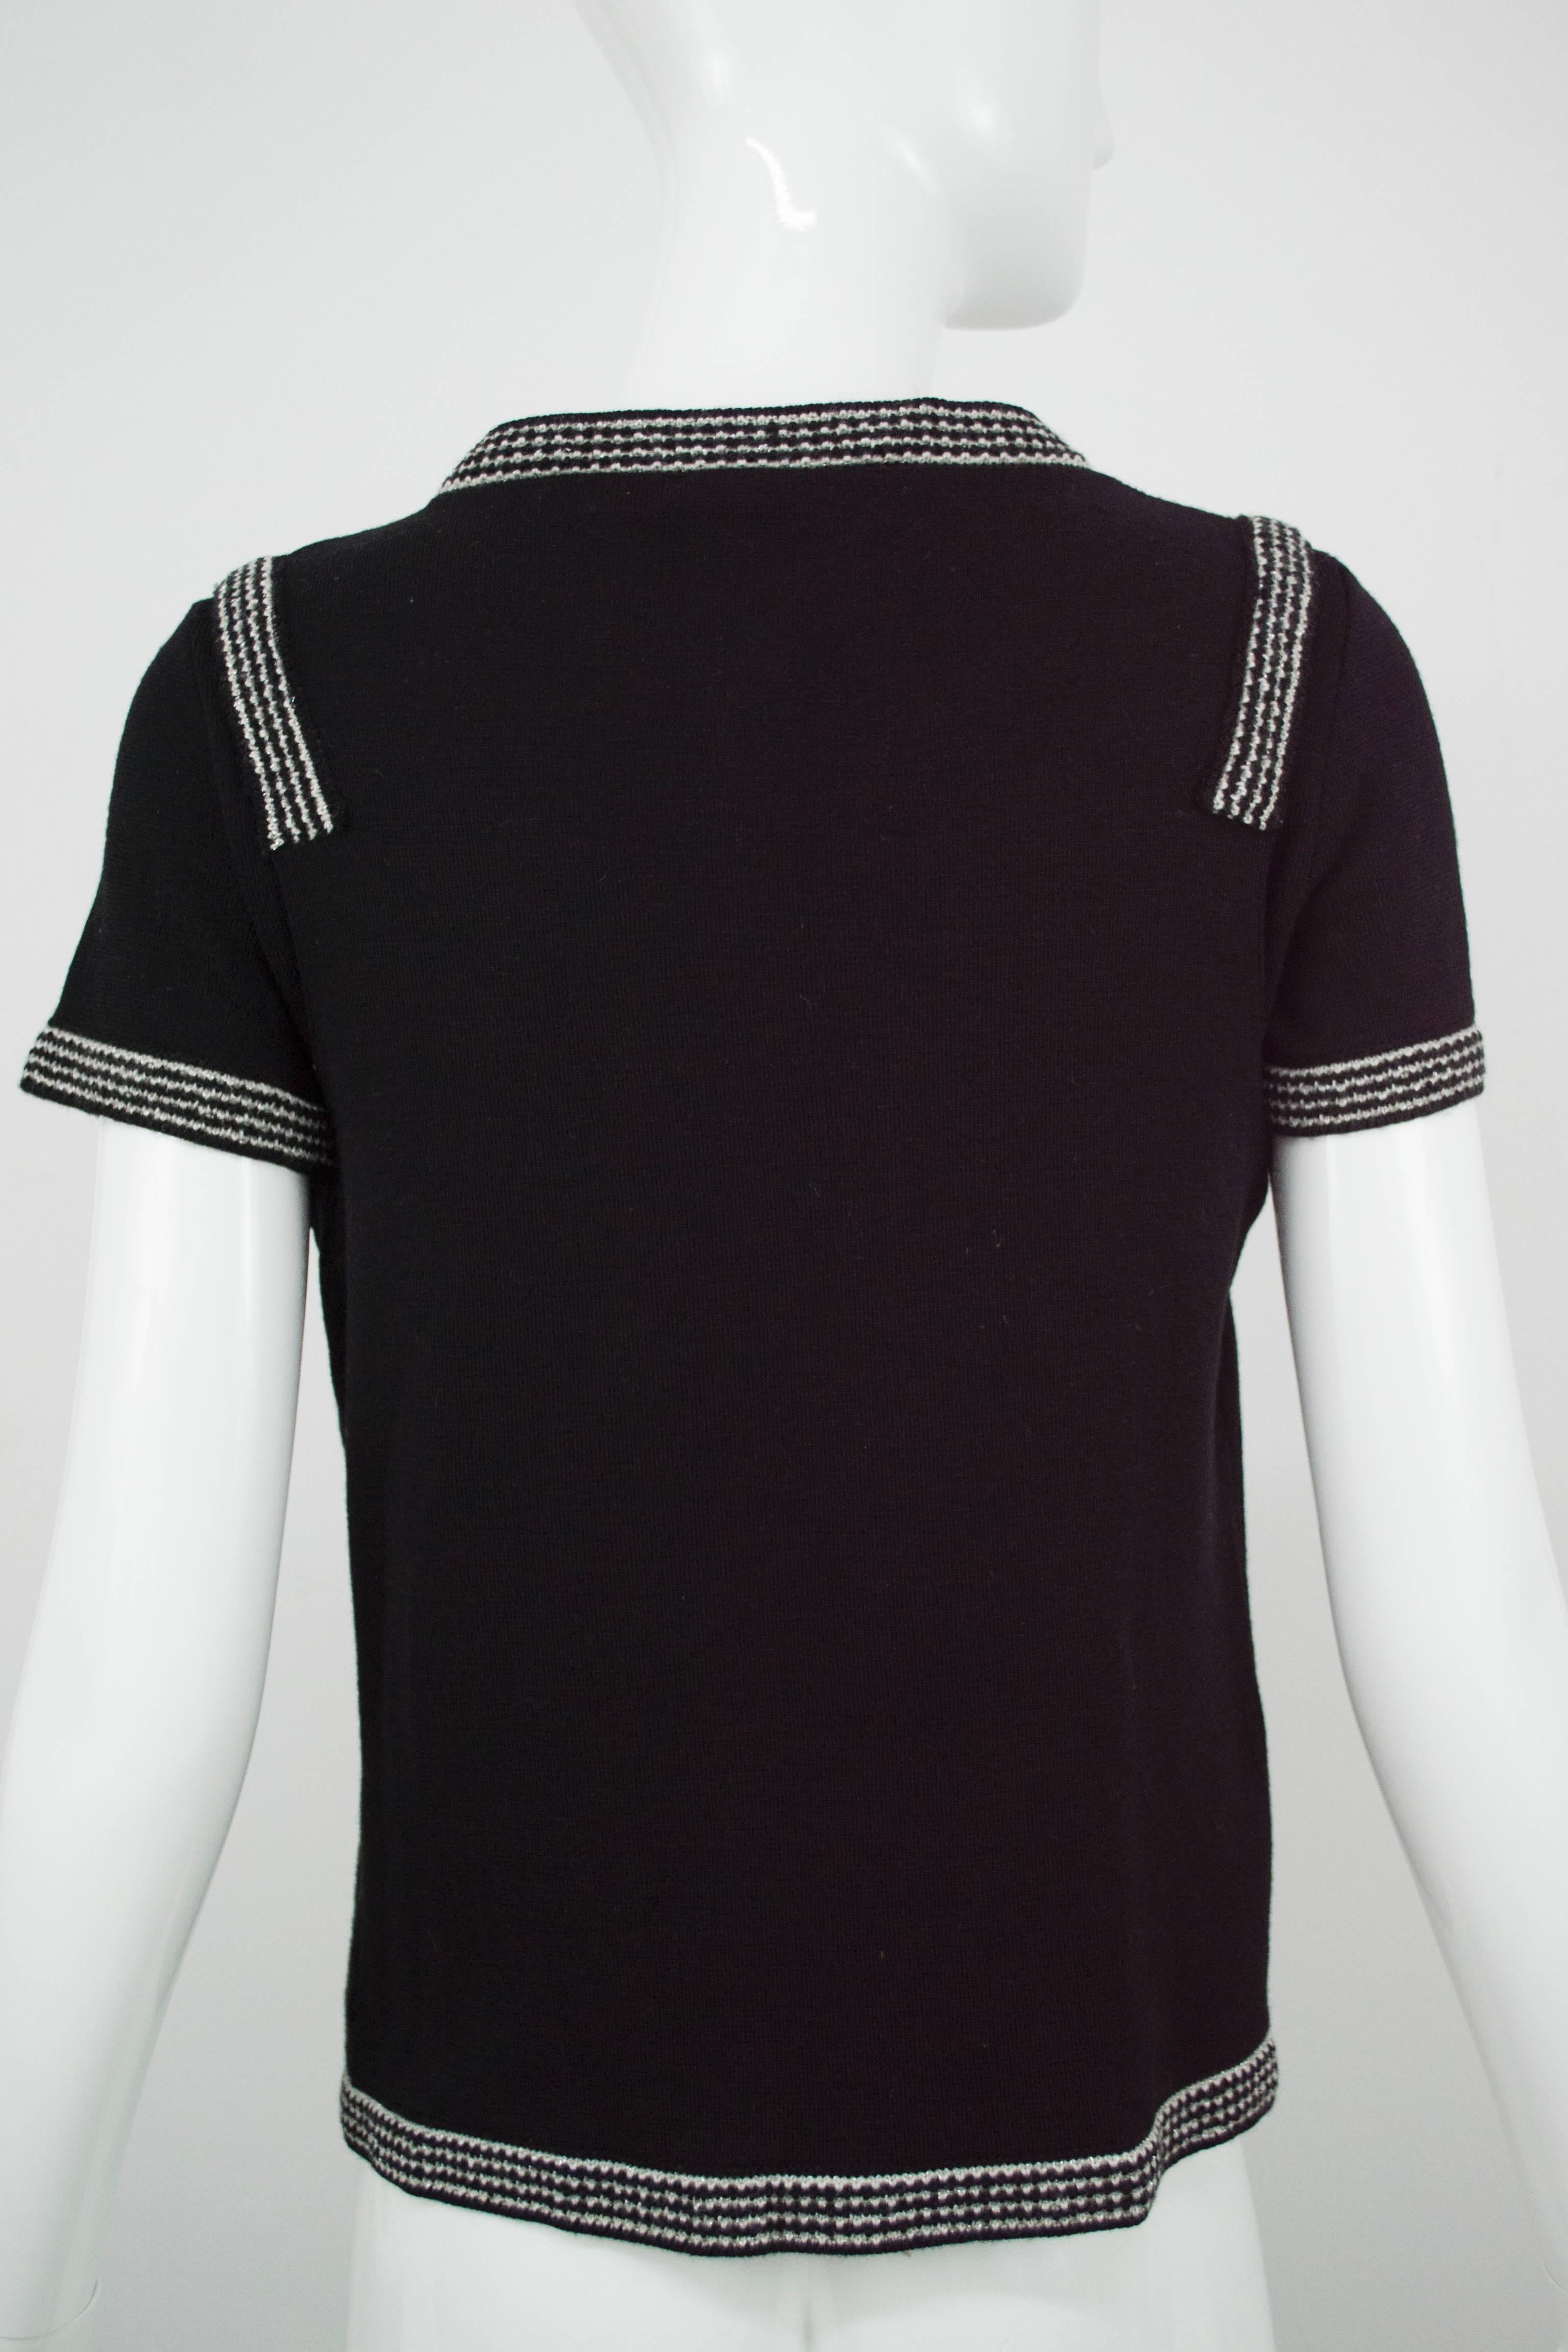 Chanel Black Metallic 2pc Twinset Sweater 36 2